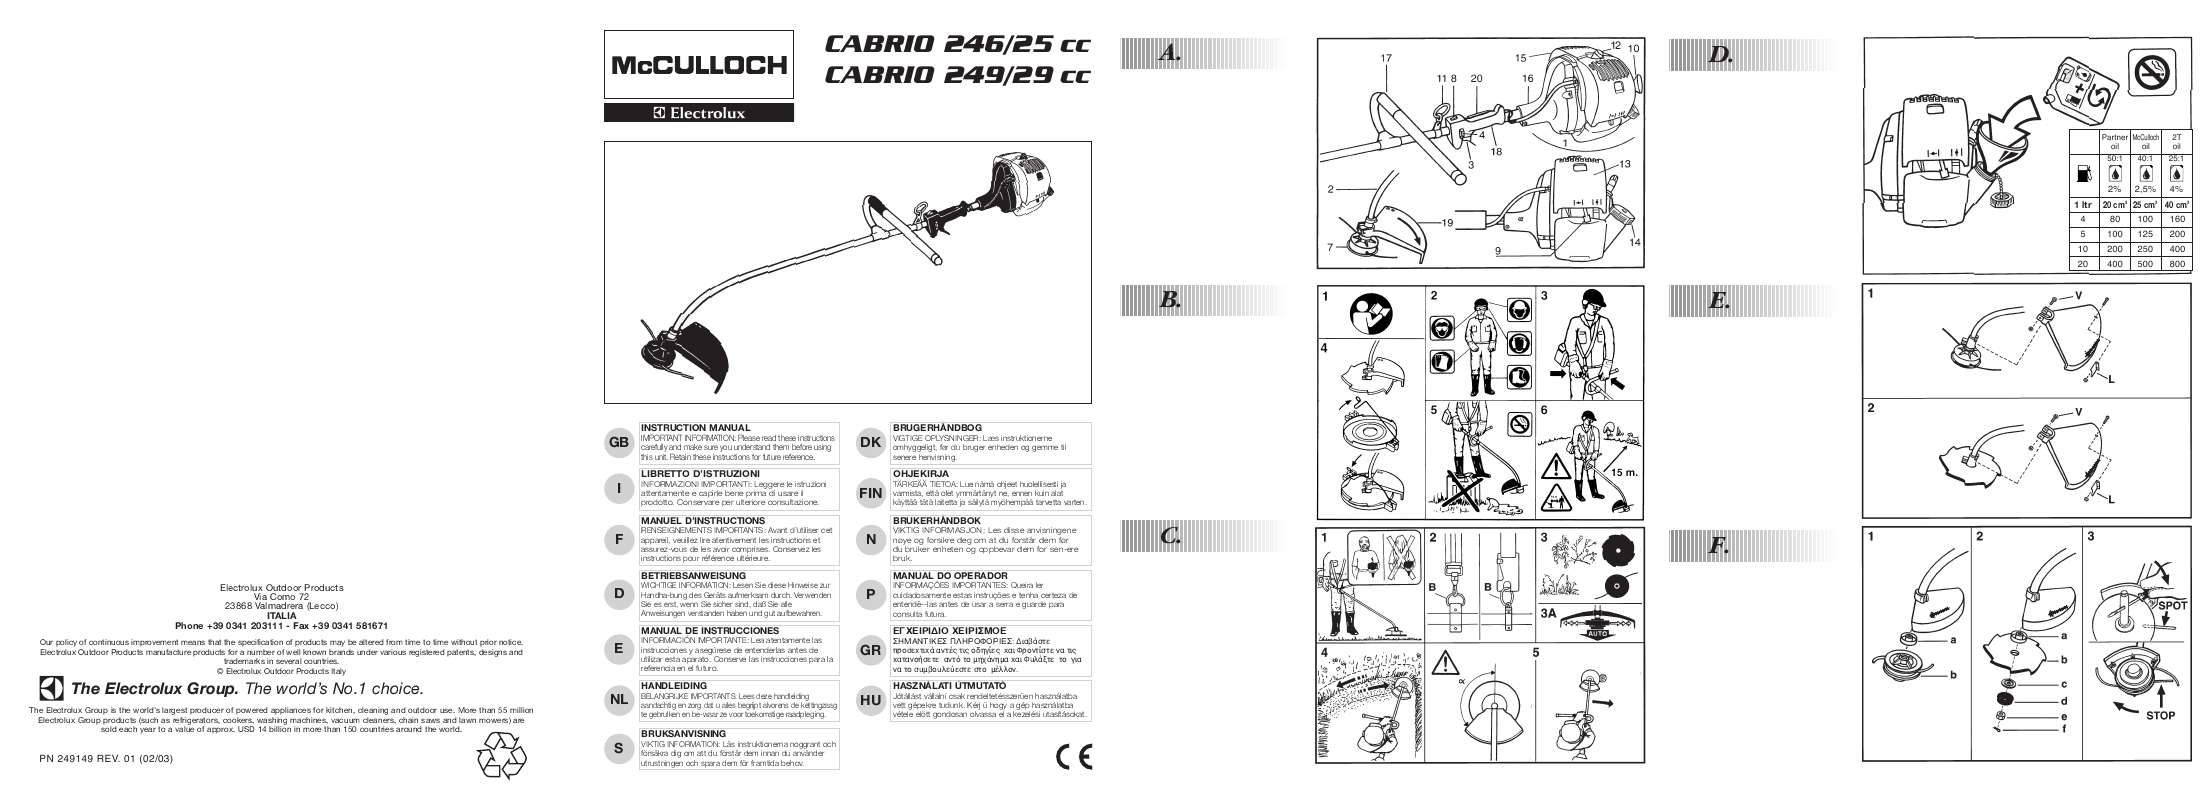 Guide utilisation  MCCULLOCH CABRIO 246-25 CC  de la marque MCCULLOCH